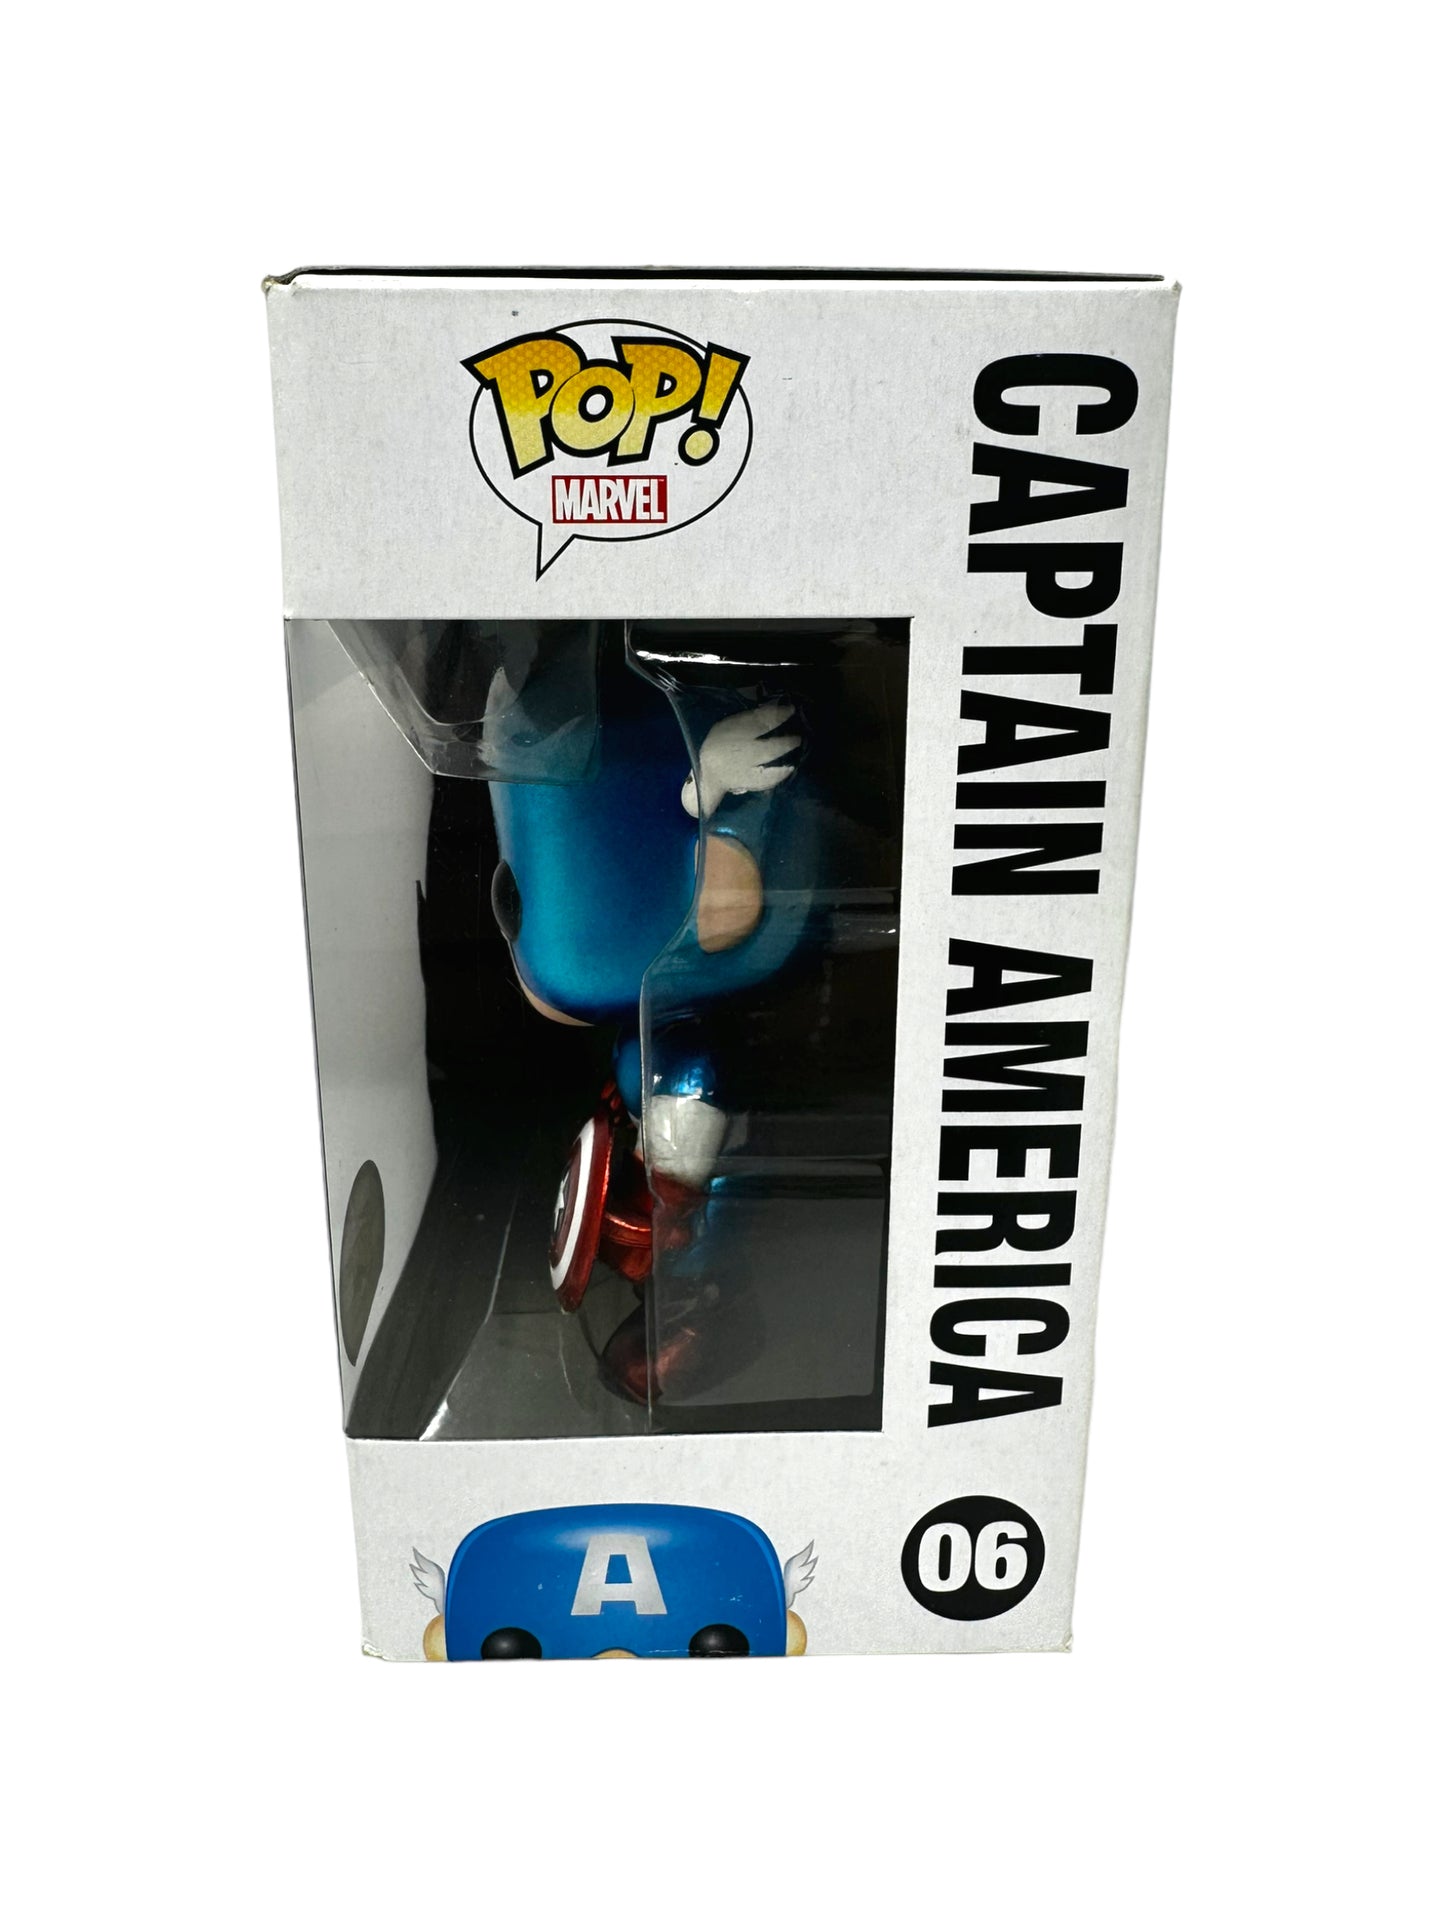 Sold - 2011 SDCC Captain America 06 Metallic LE 480